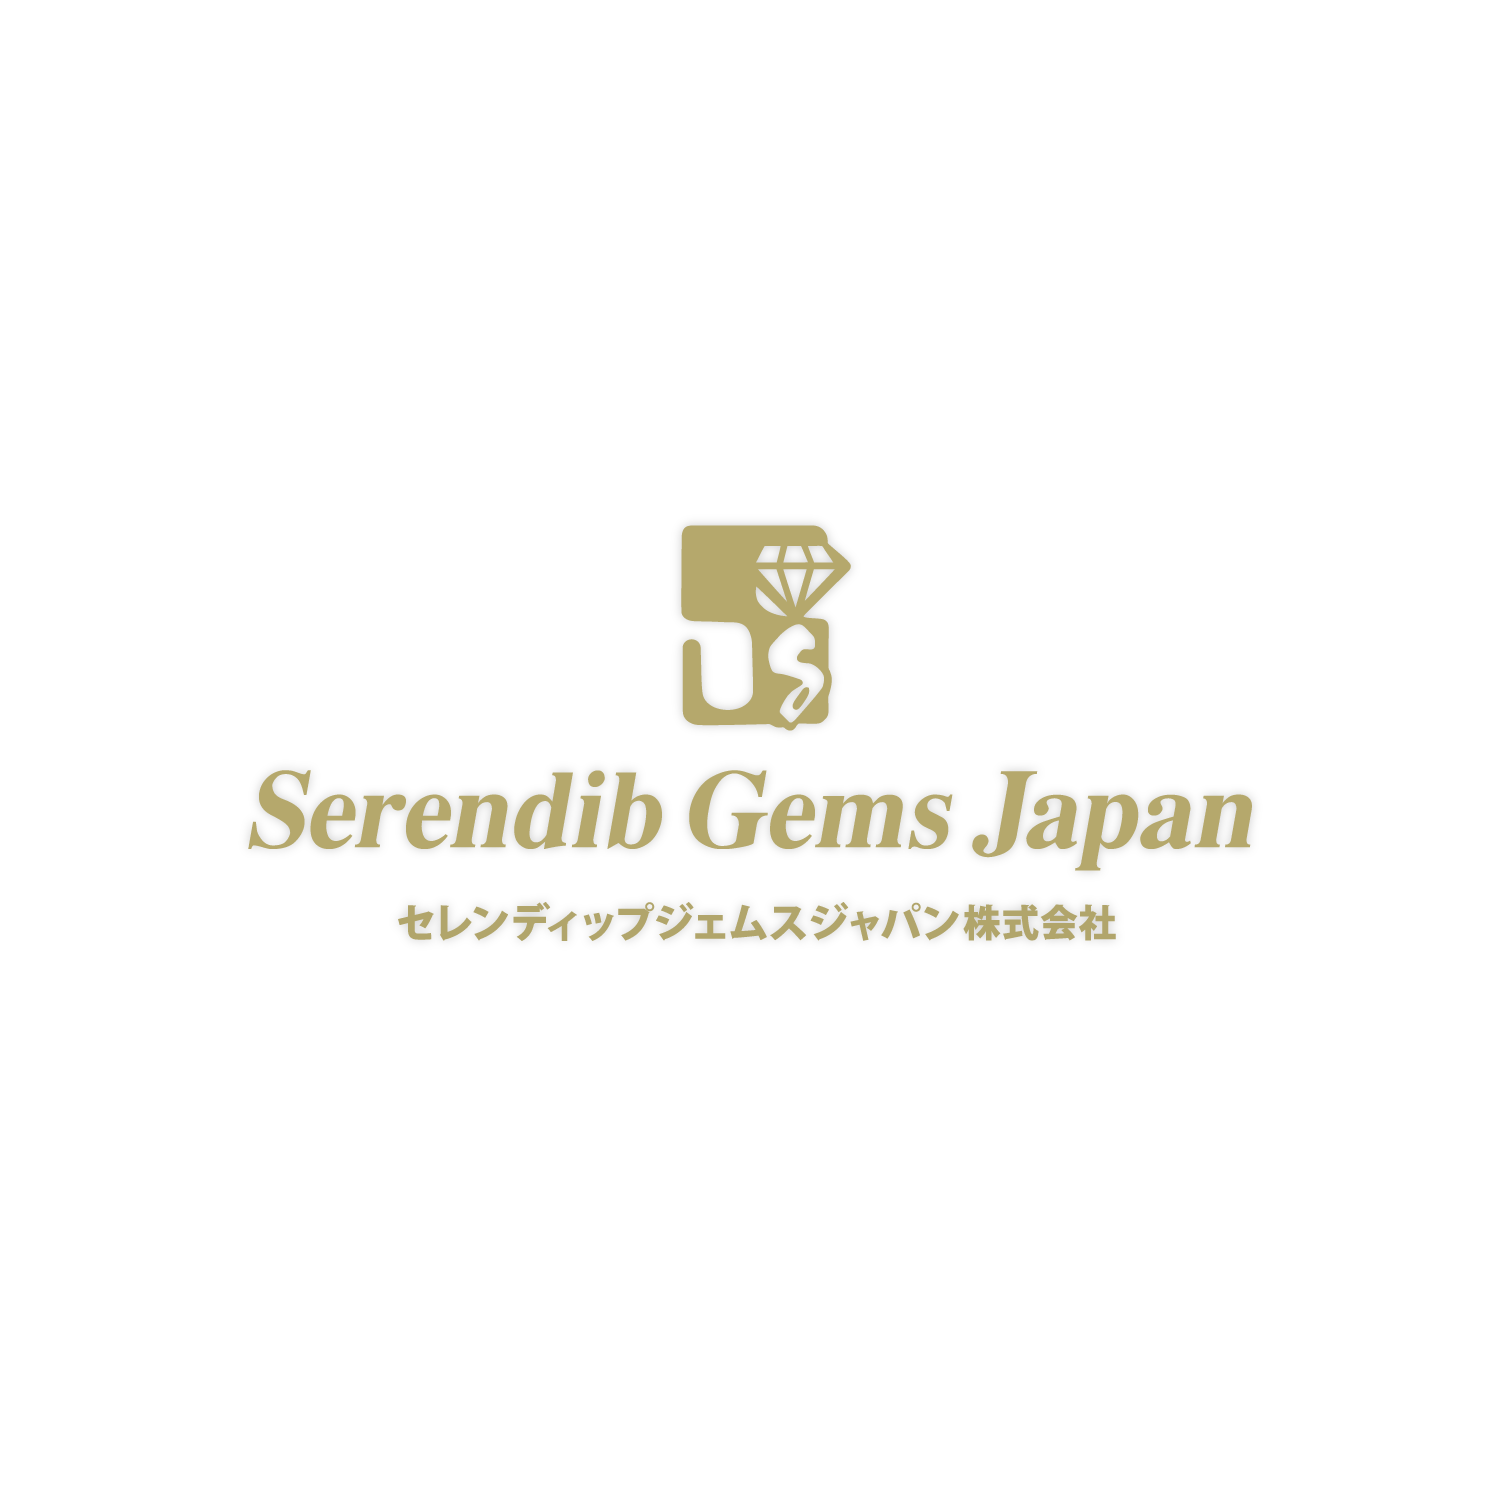 Serendib Gems Japan：セレンディップジェムスジャパン